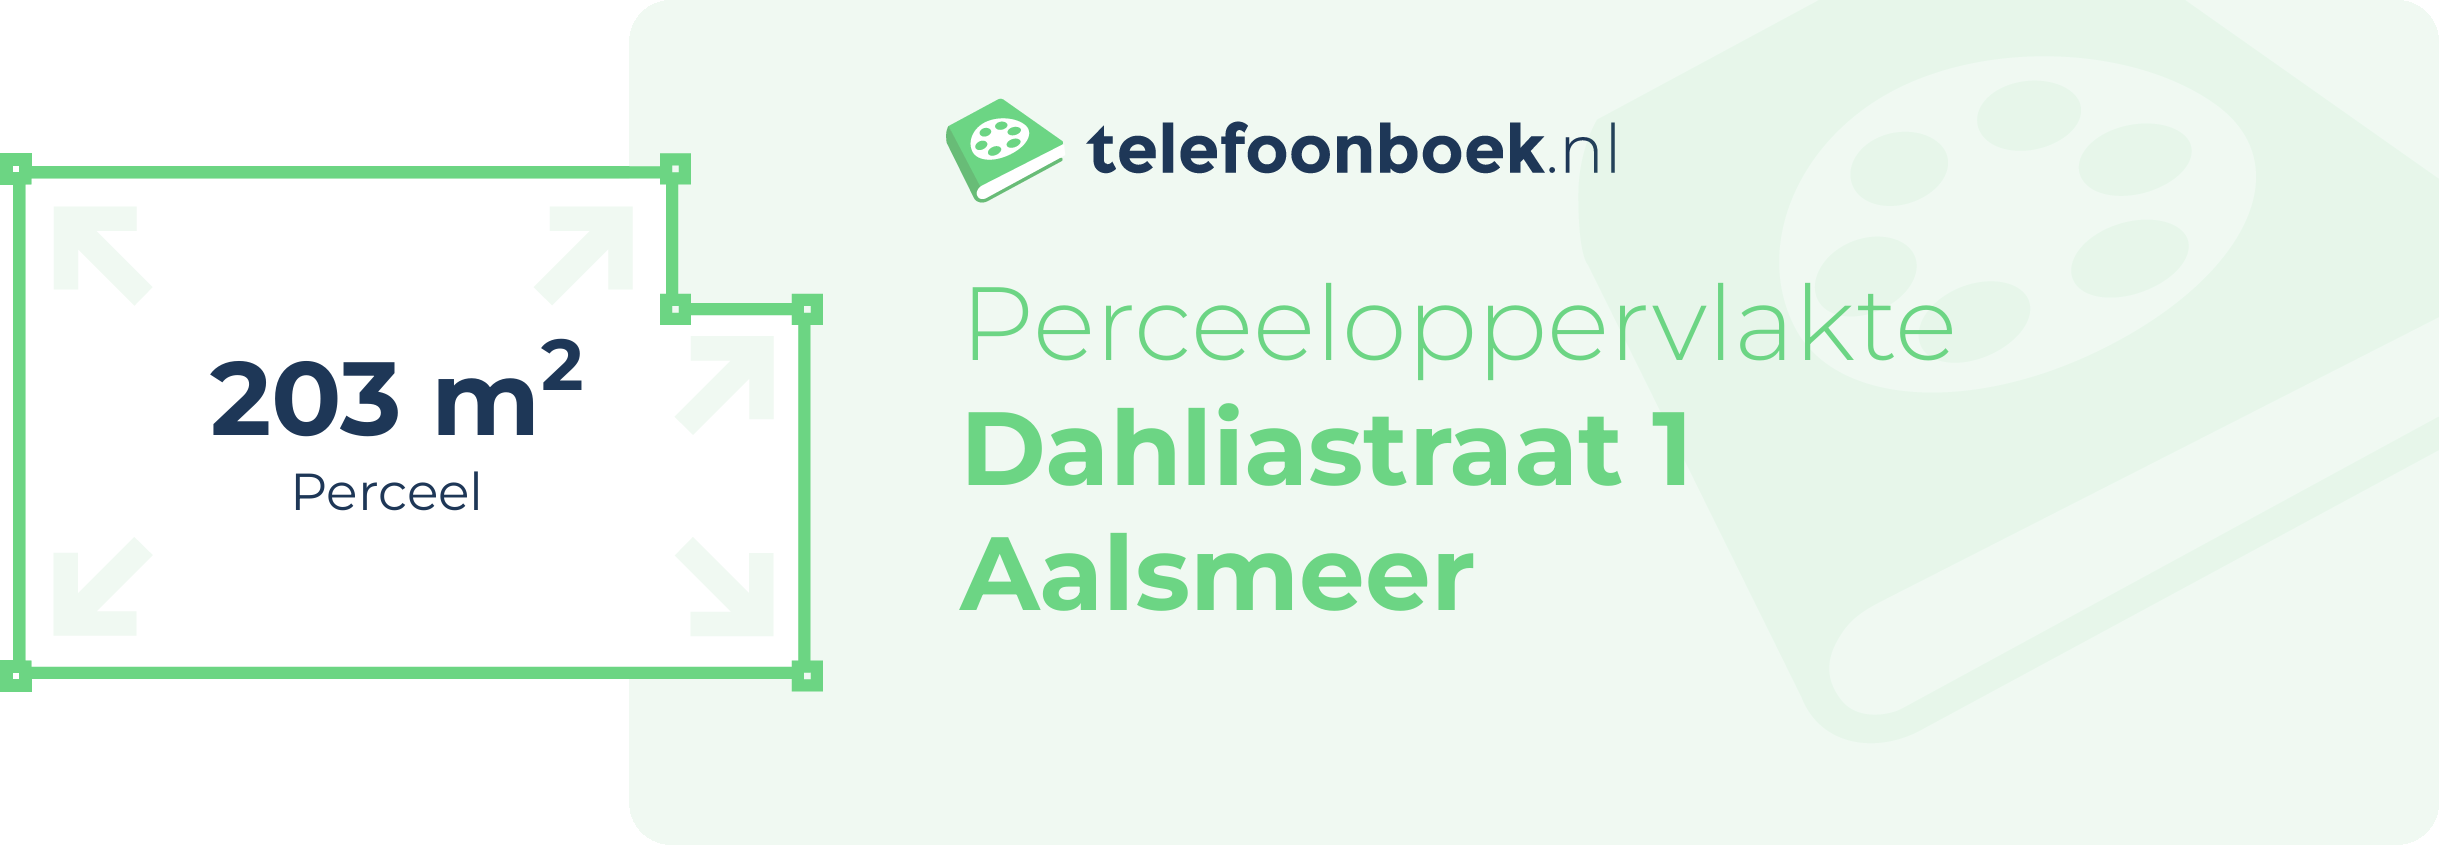 Perceeloppervlakte Dahliastraat 1 Aalsmeer